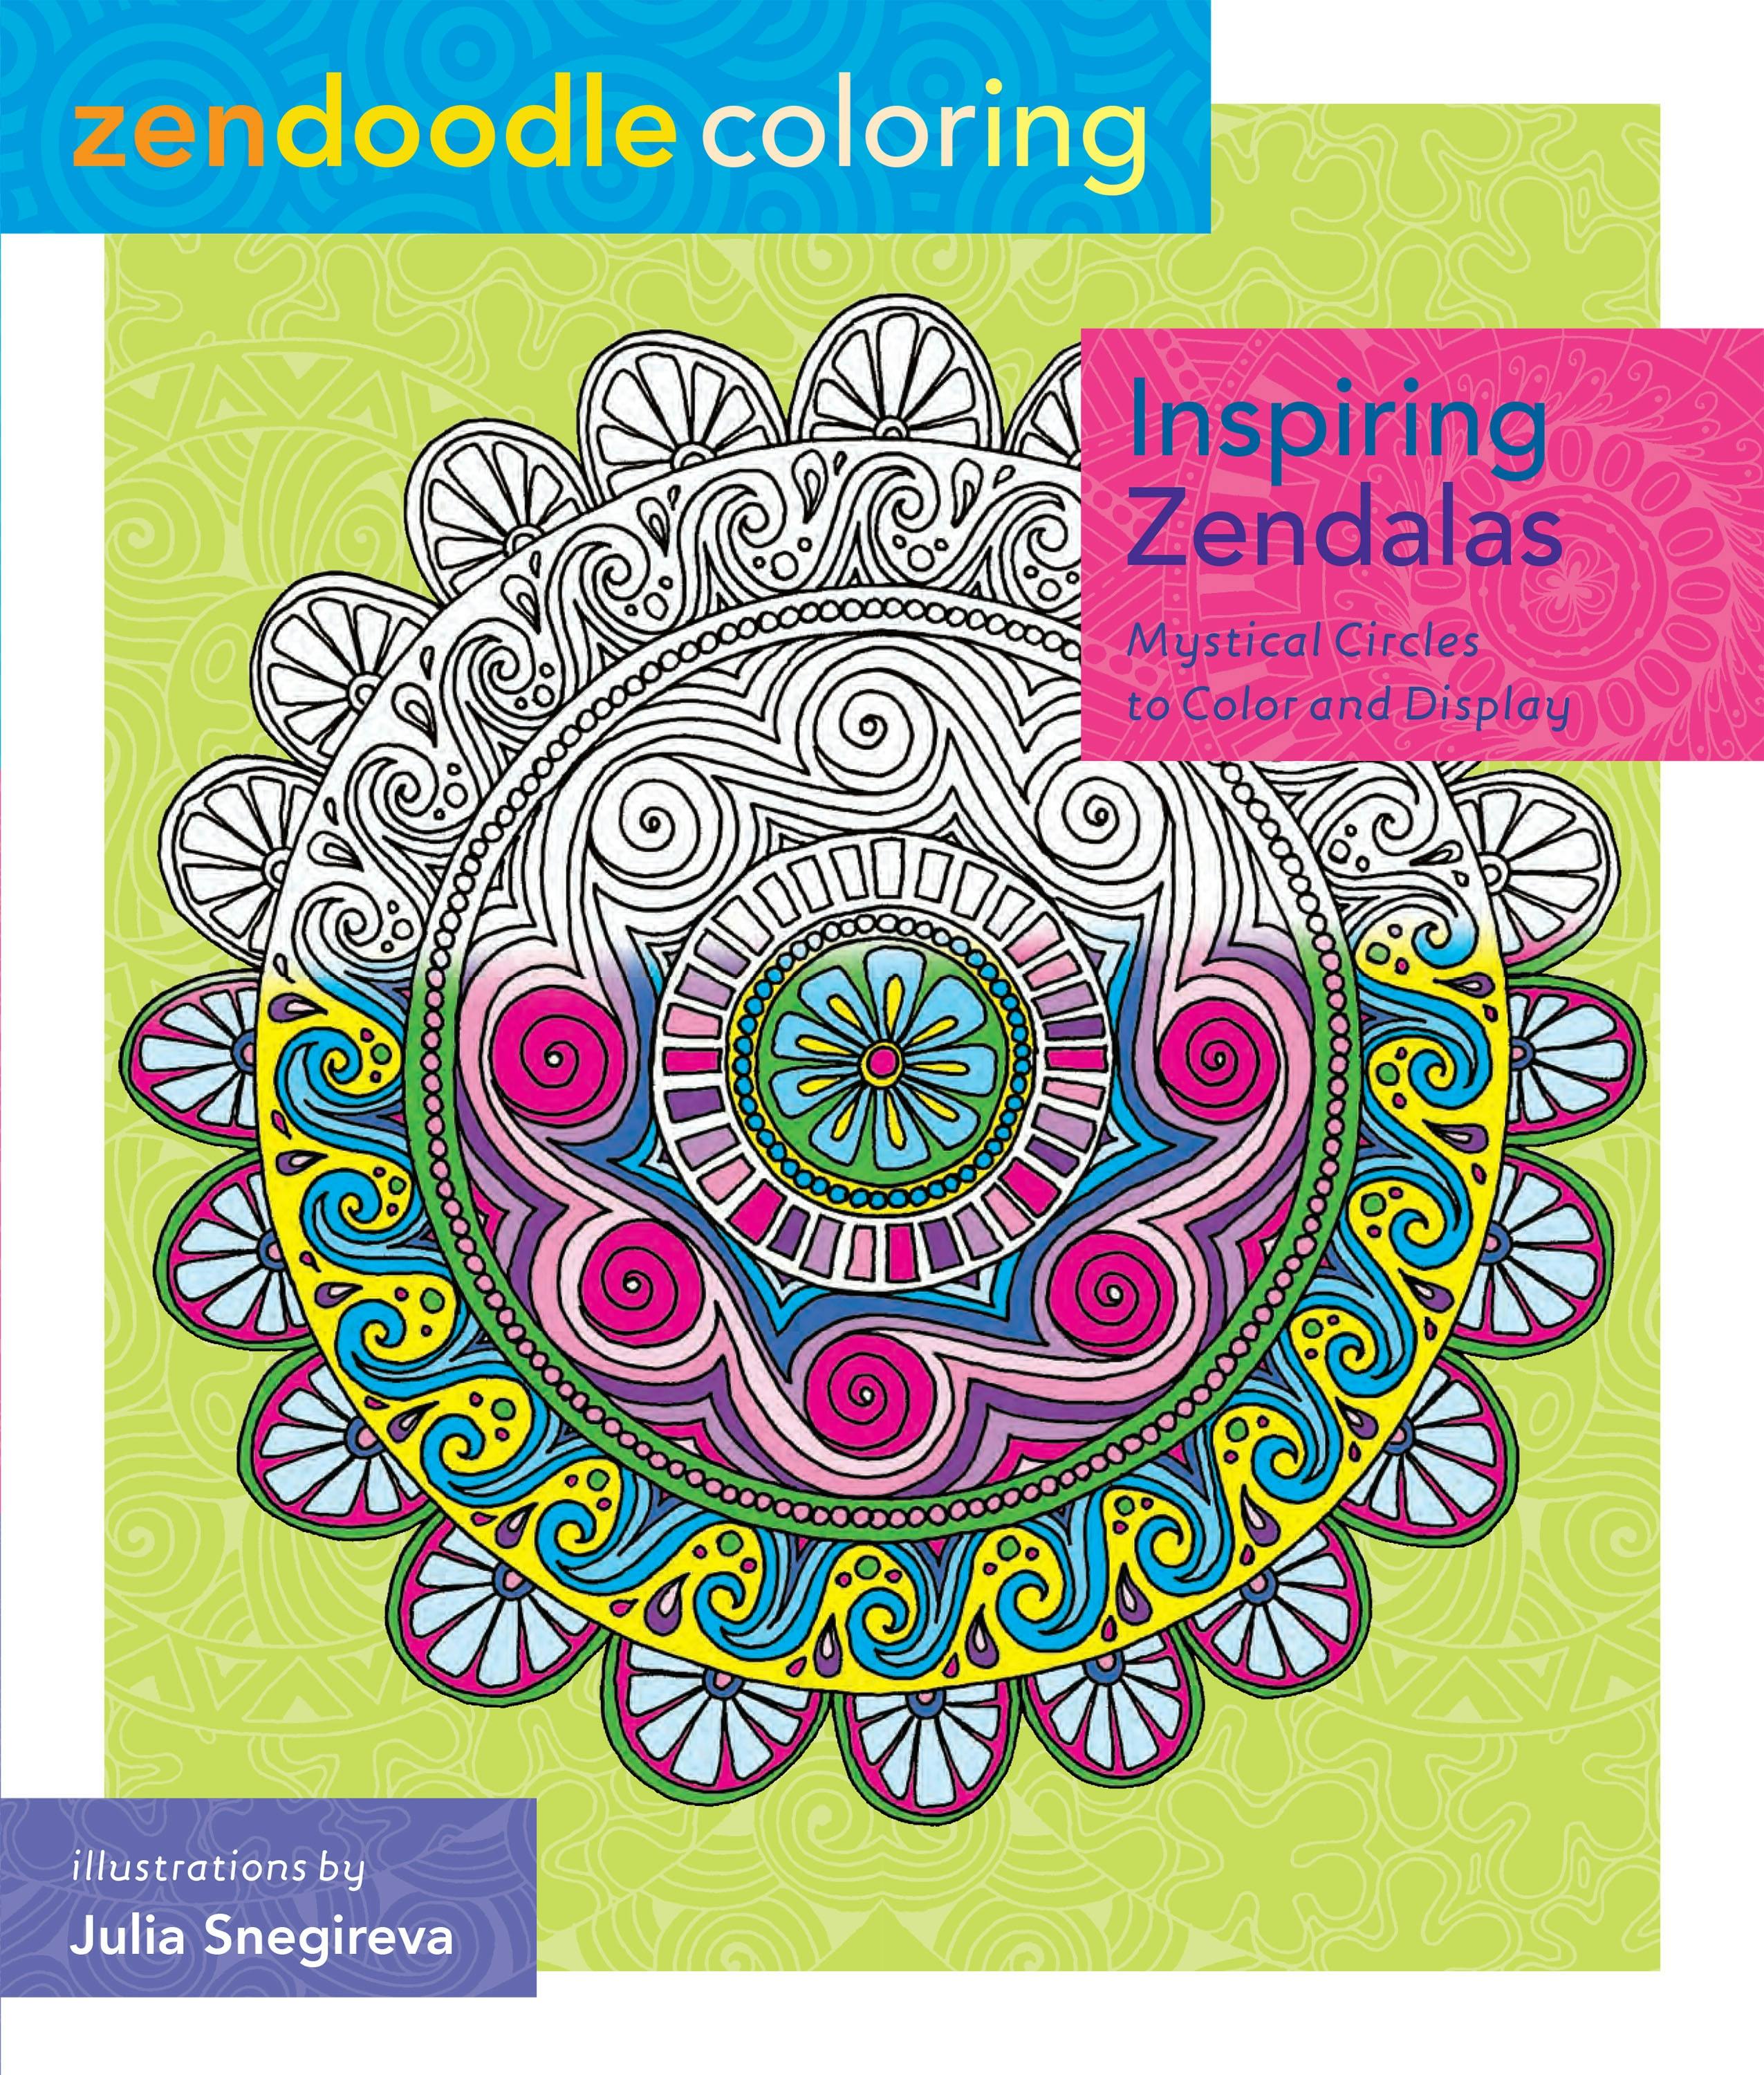 Zendoodle Coloring: Inspiring Zendalas